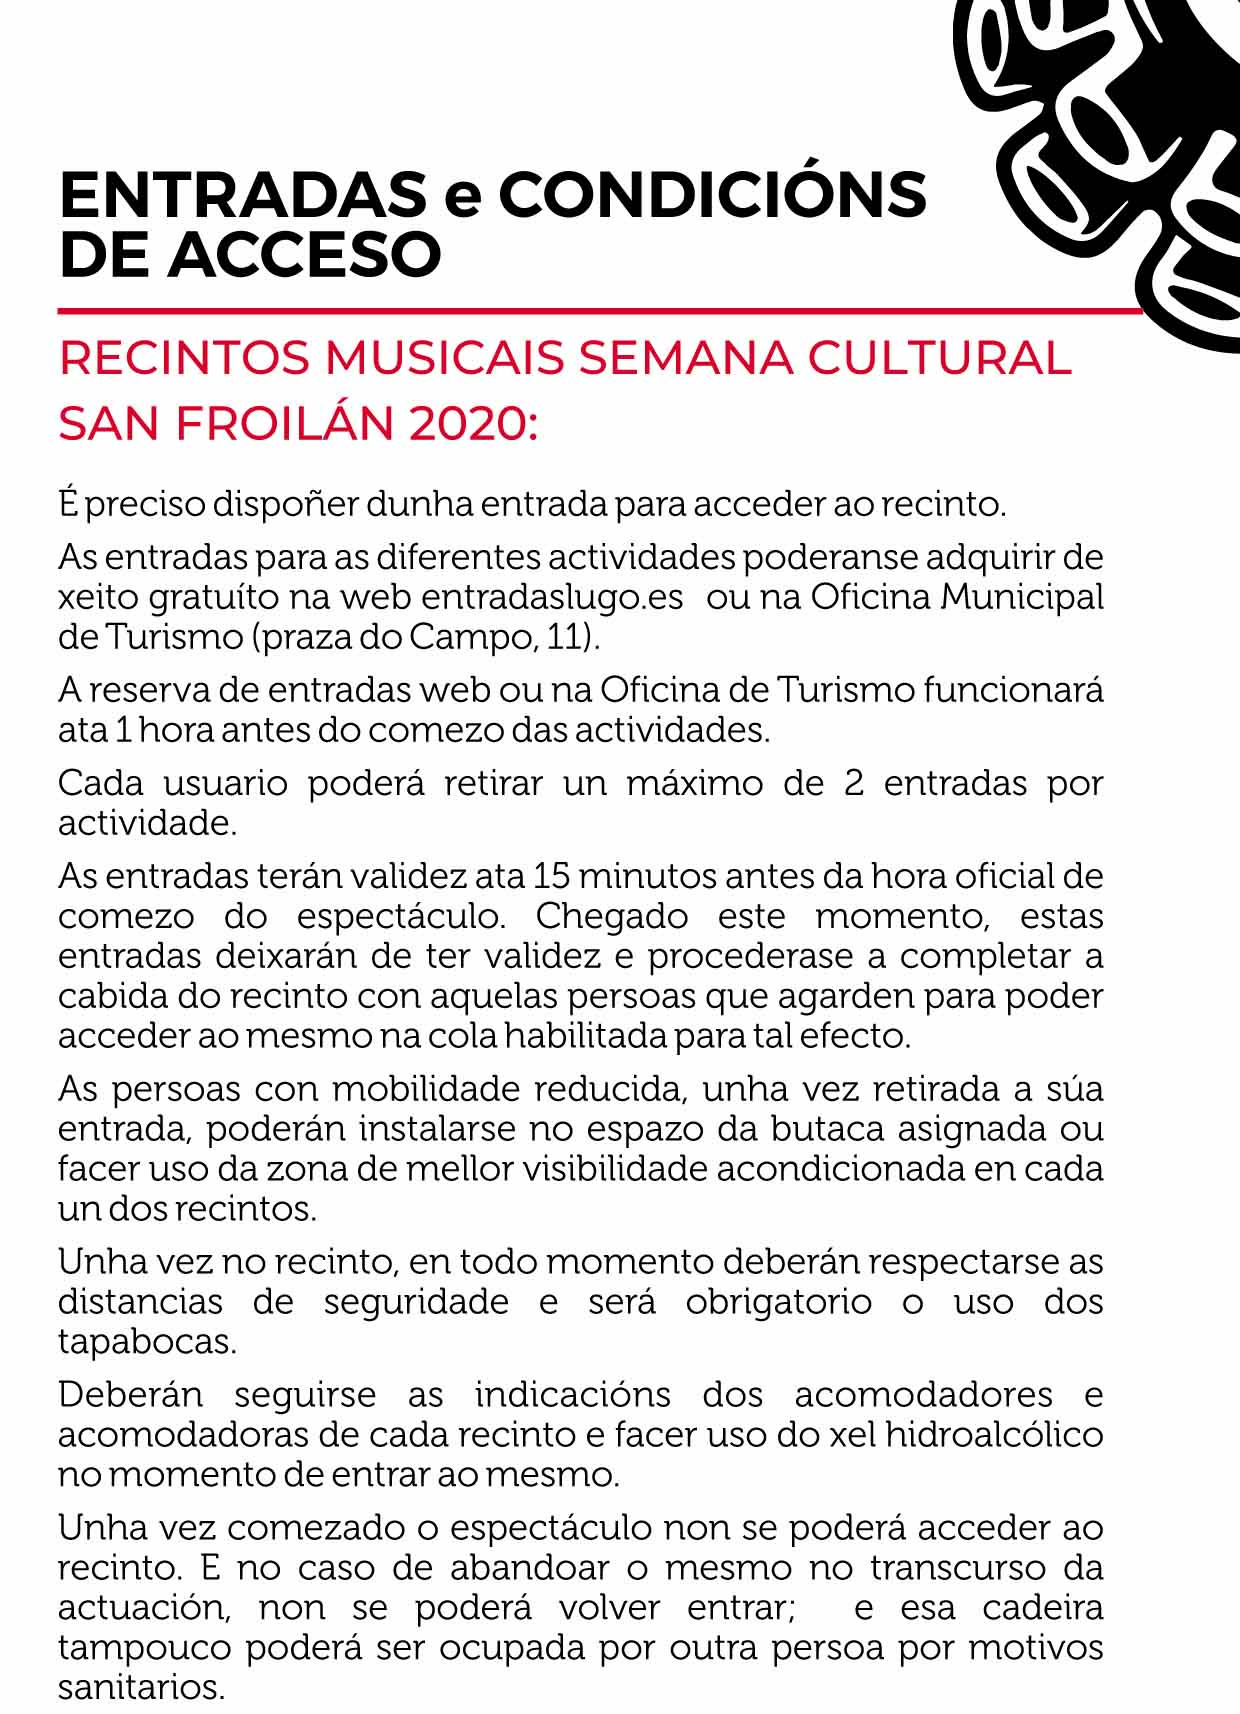 San Froilán 2020 - Programa